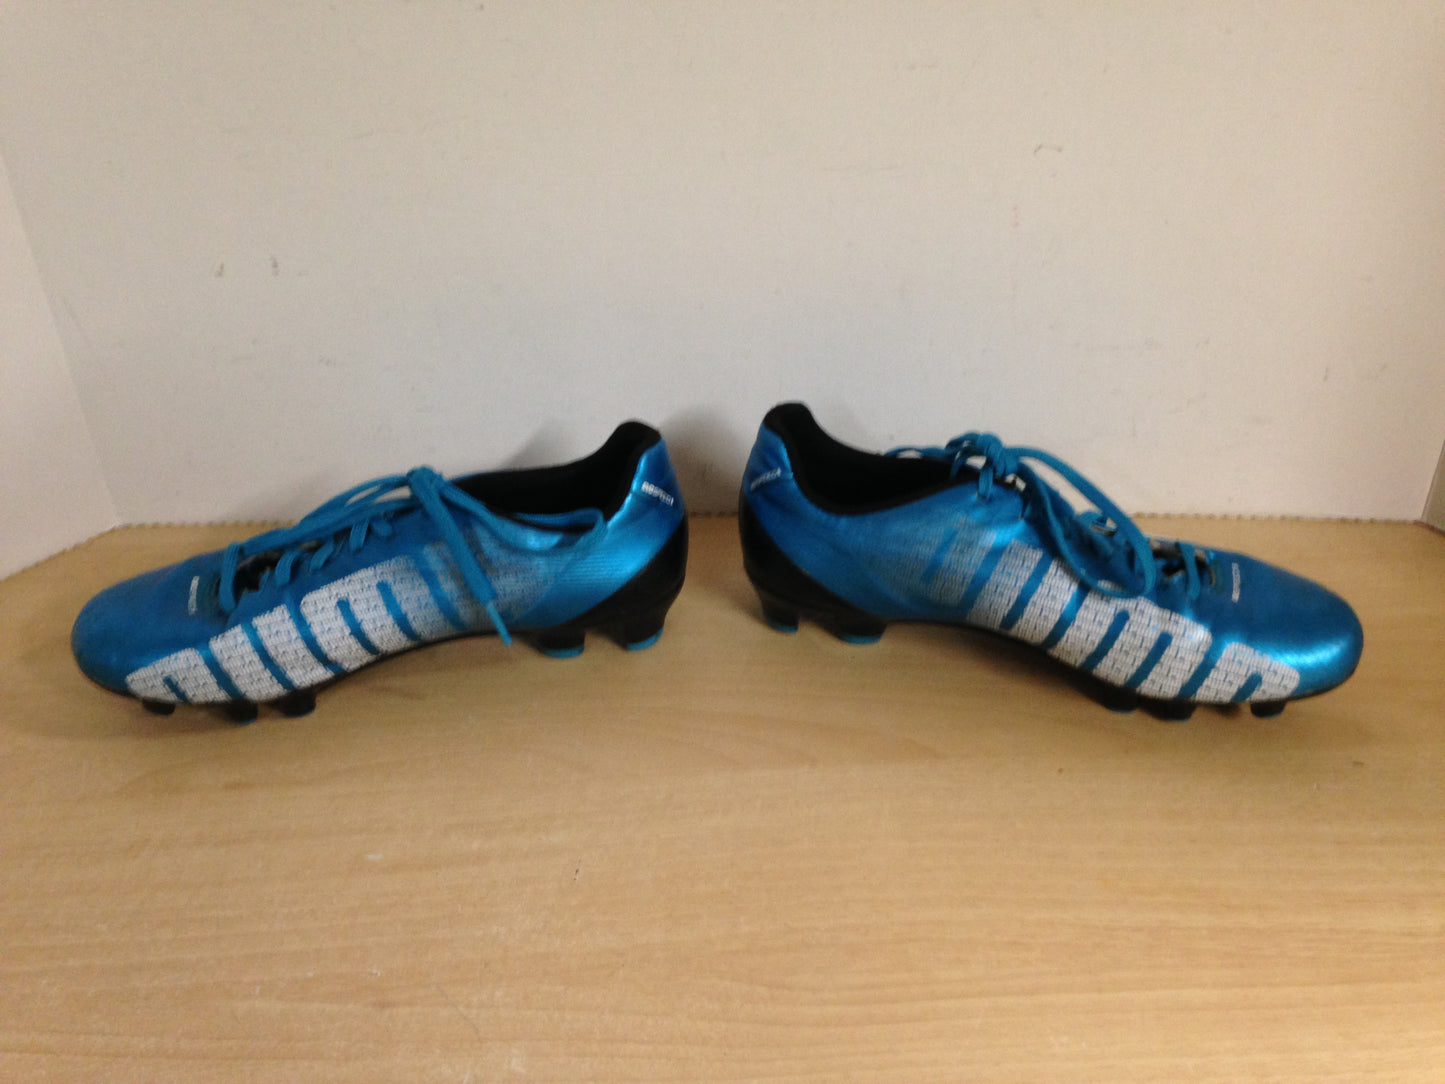 Soccer Shoes Cleats Child Size 4.5 Puma Evo Blue White Black